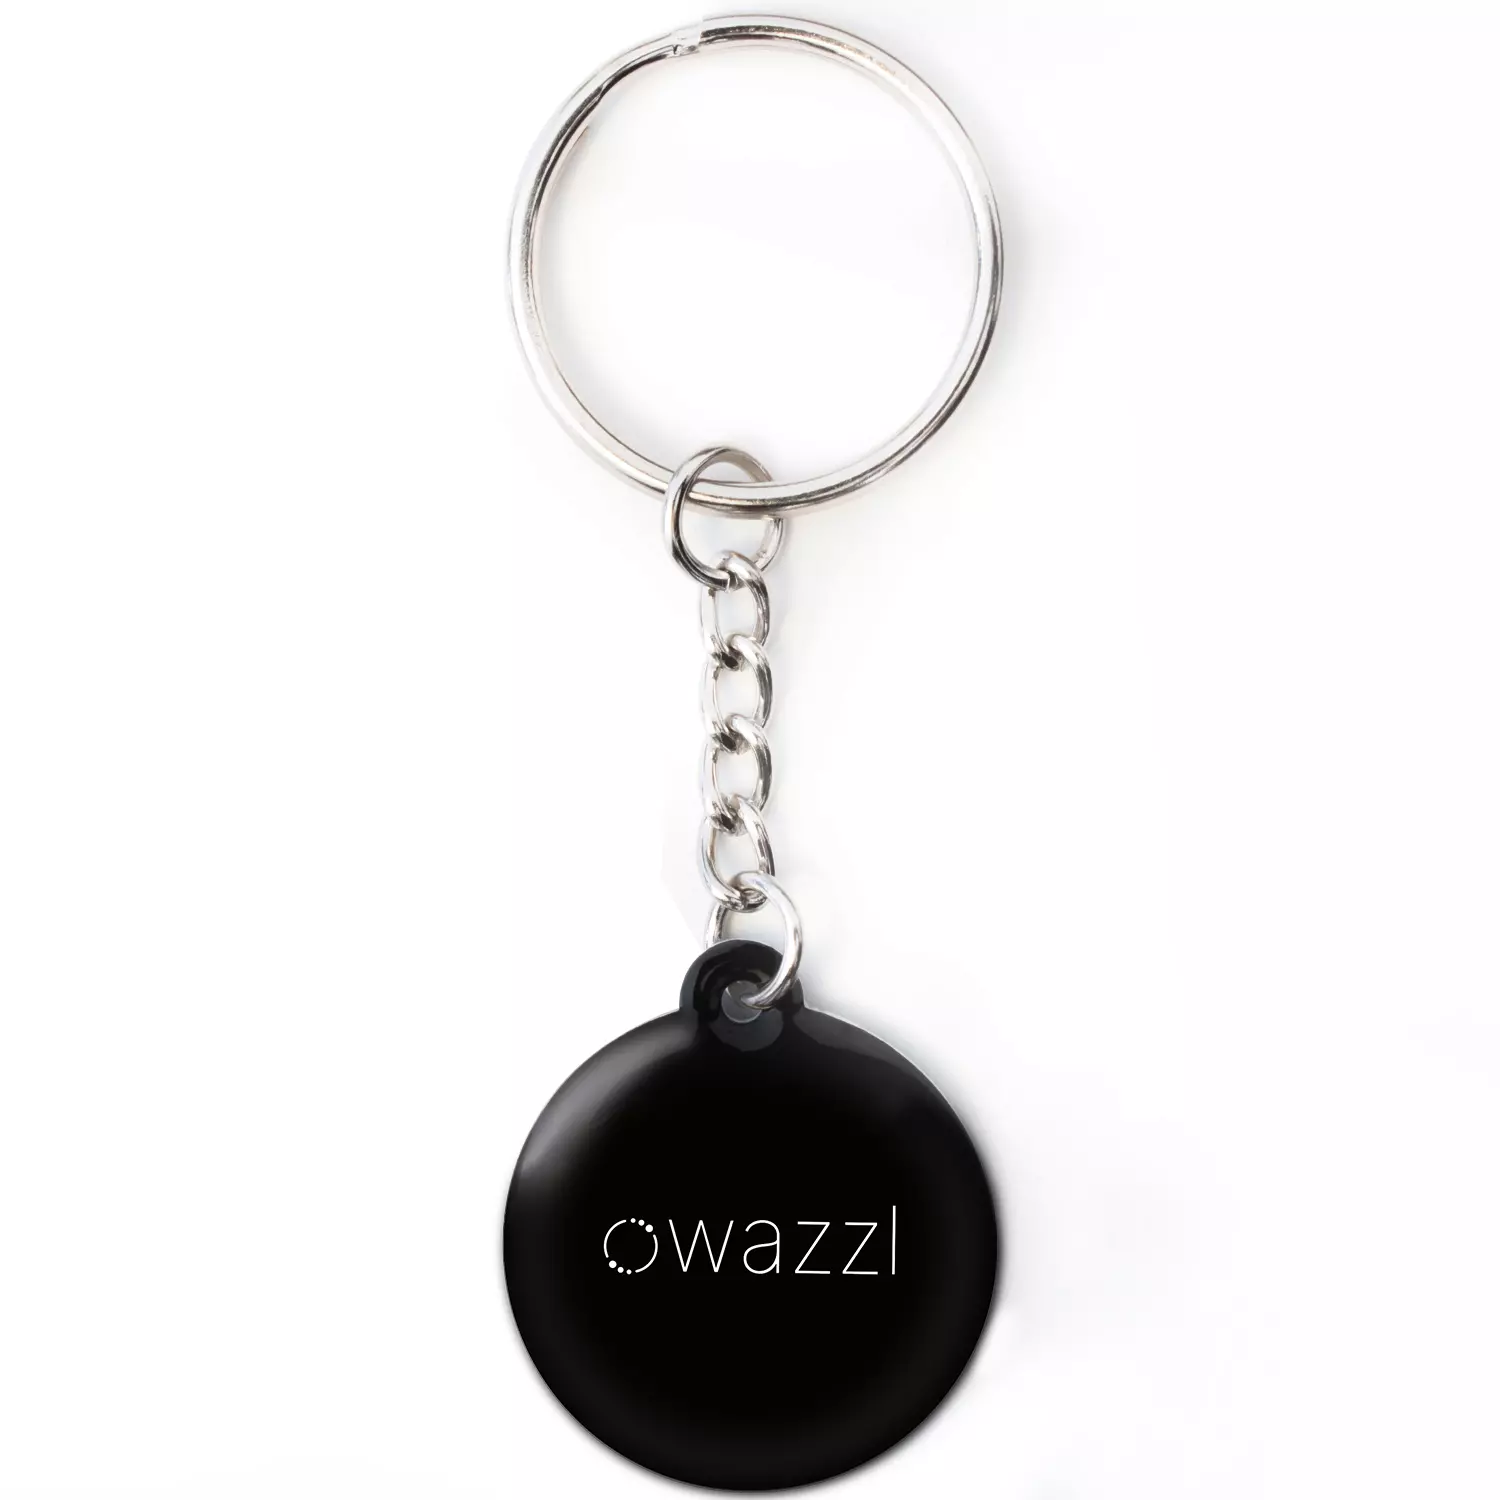 wazzl keychain black - Digital business card